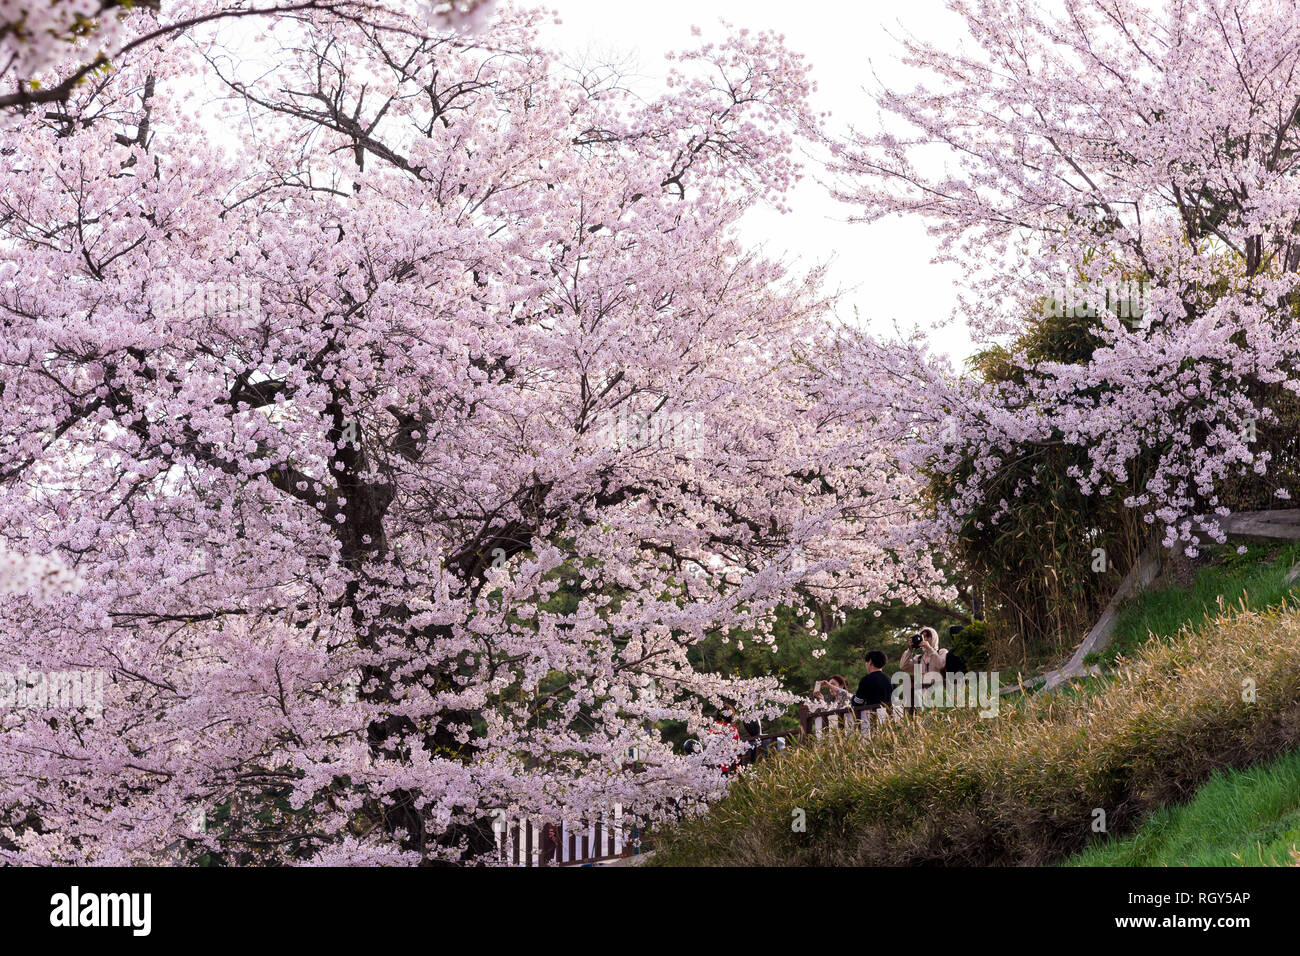 Cherry Blossom Festival à Gyeongpodae lake, Gangneung city. Banque D'Images